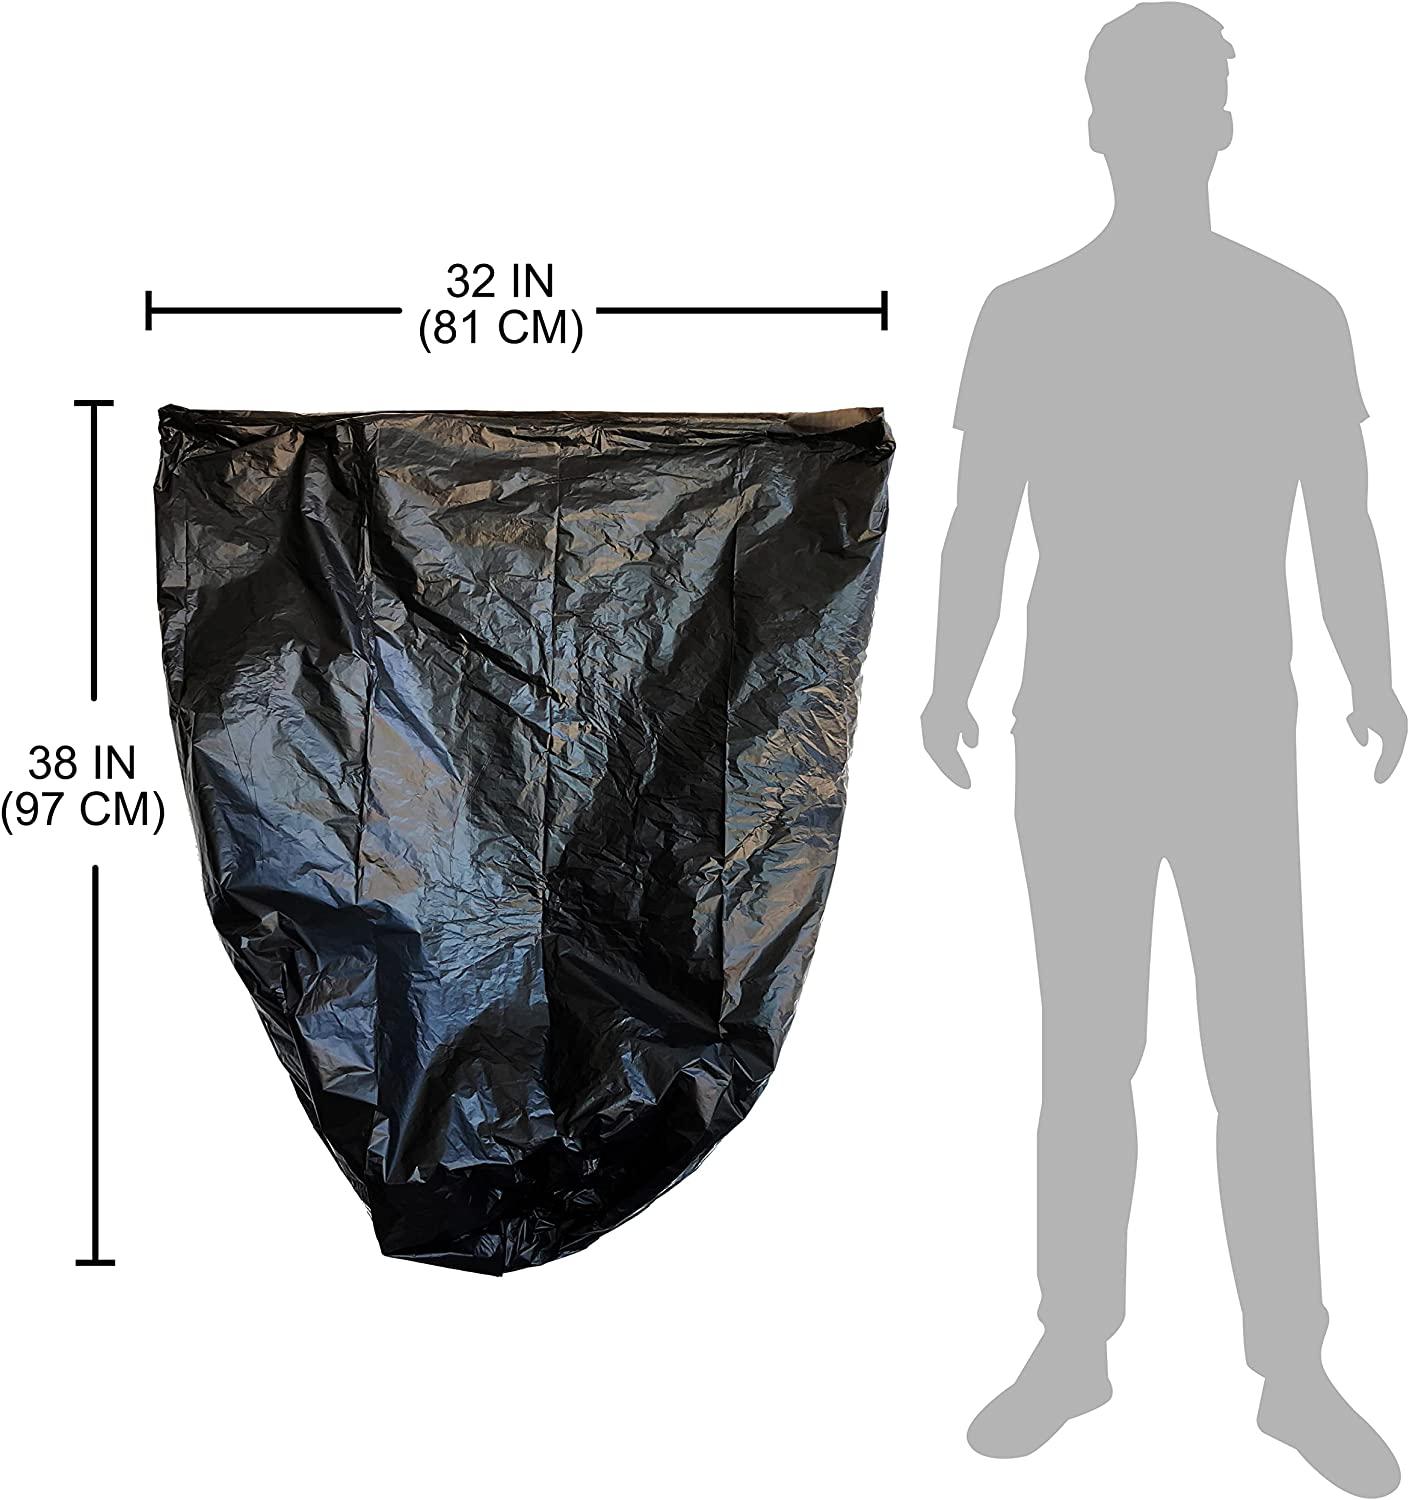 Reli. 30 Gallon Trash Bags Drawstring | 250 Count Bulk | Black | 30 Gallon  Garbage Bags Heavy Duty | Large